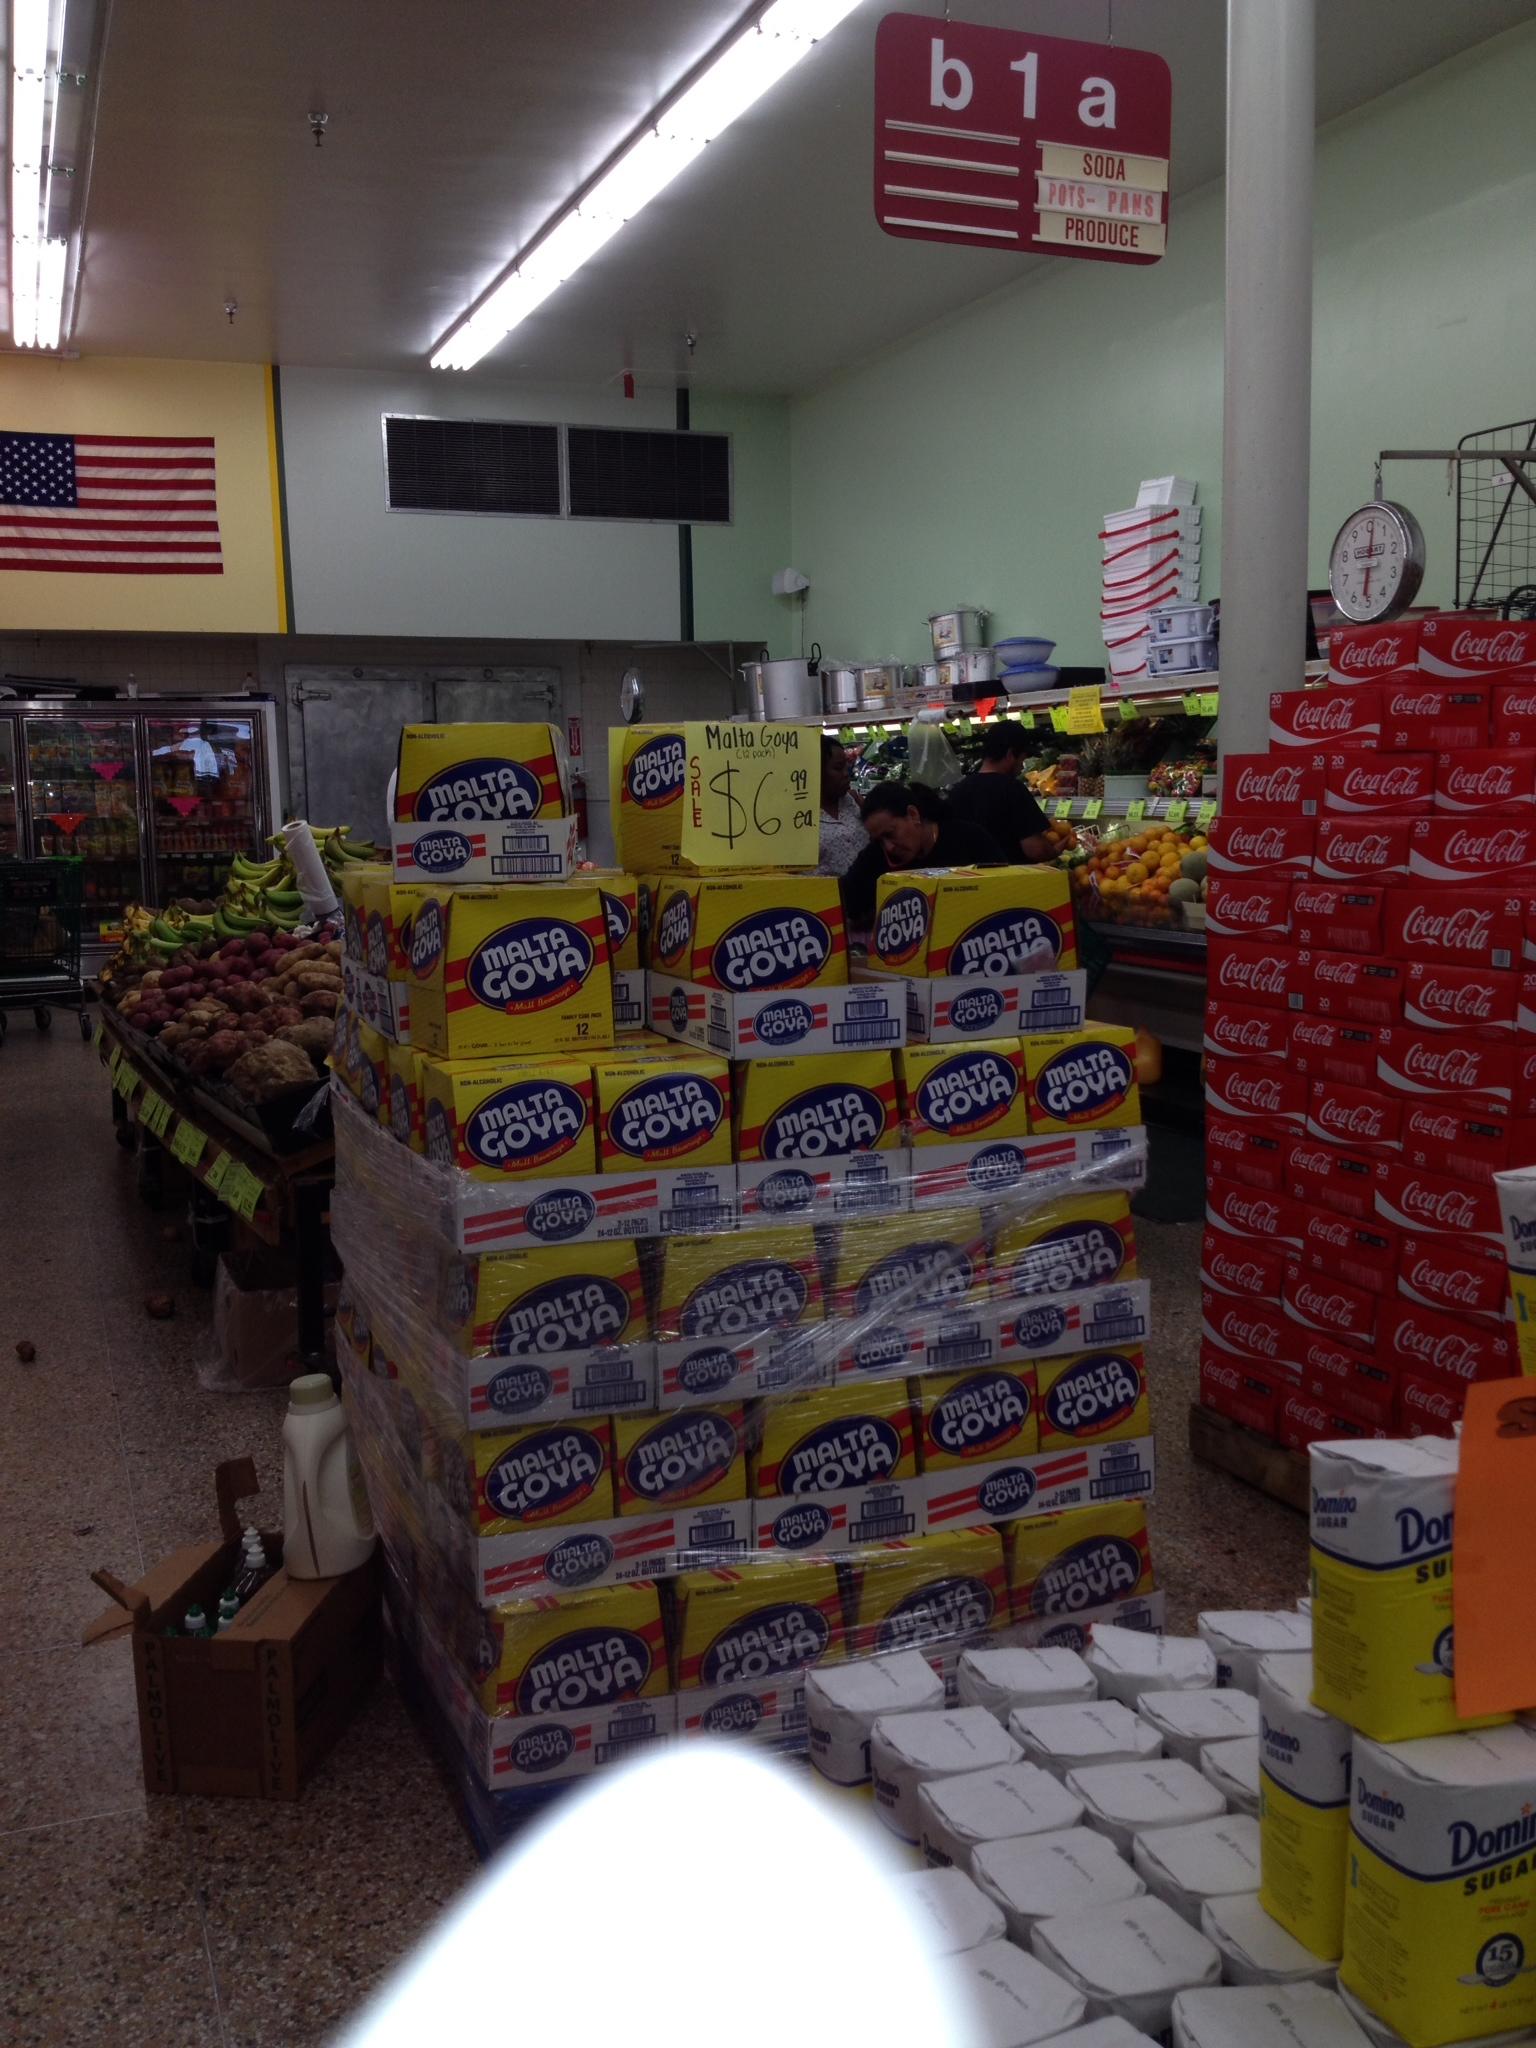 Americana Grocery-Maryland